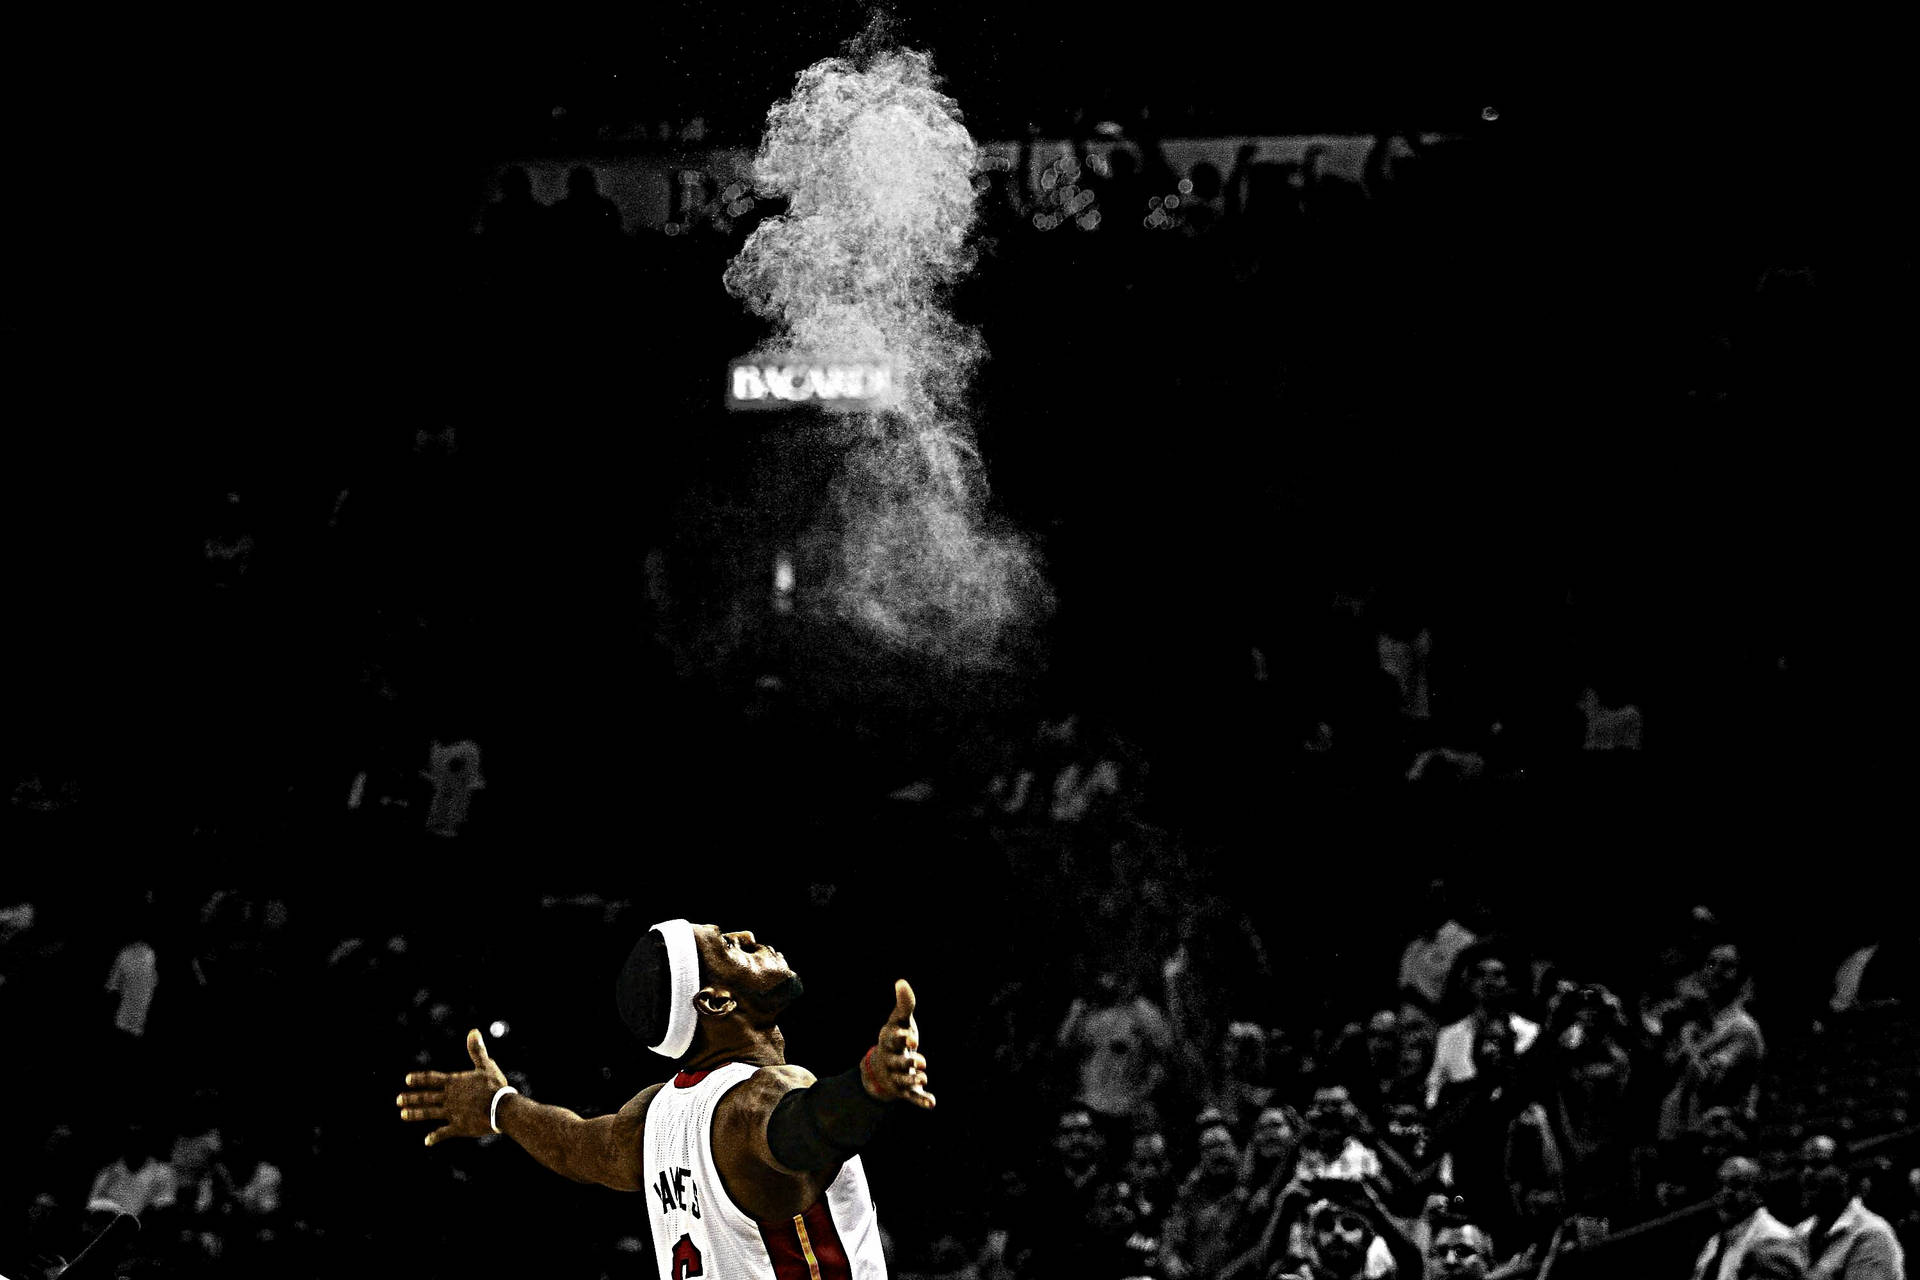 Download Lebron James dunking during an NBA game Wallpaper